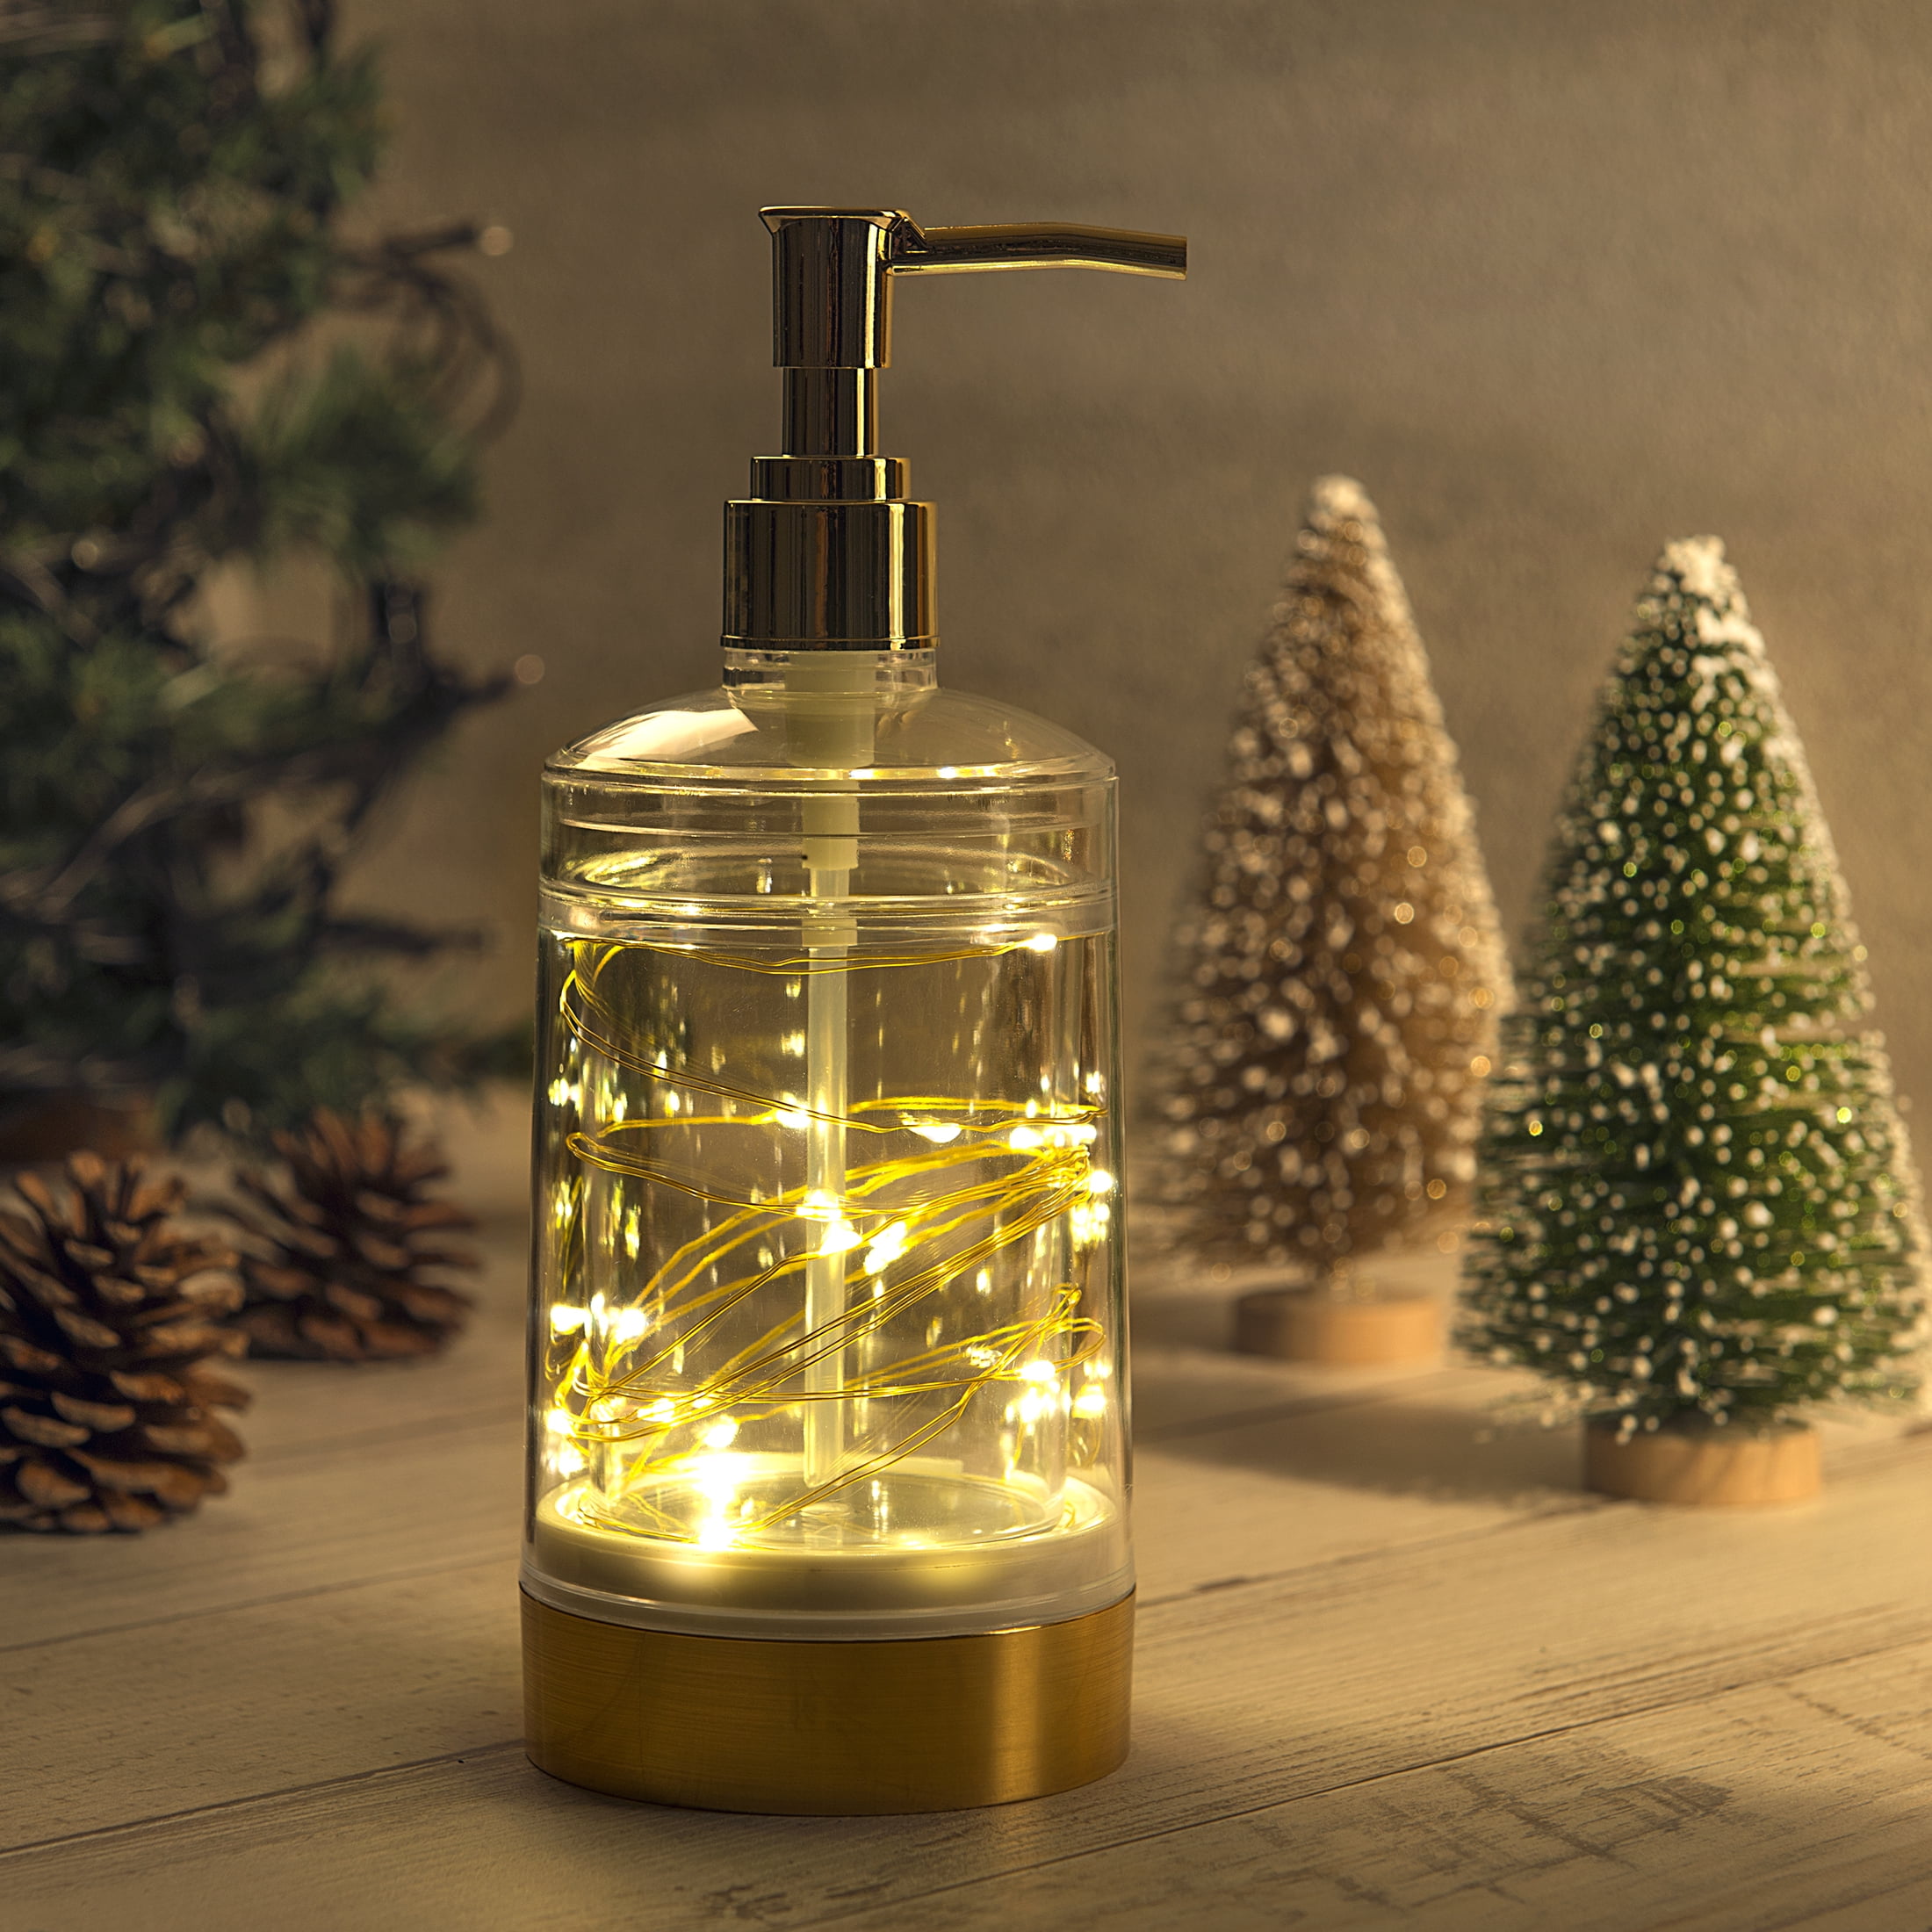 Santa Christmas Tree Plastic Refillable soap Dispensers holiday decor set of 2 